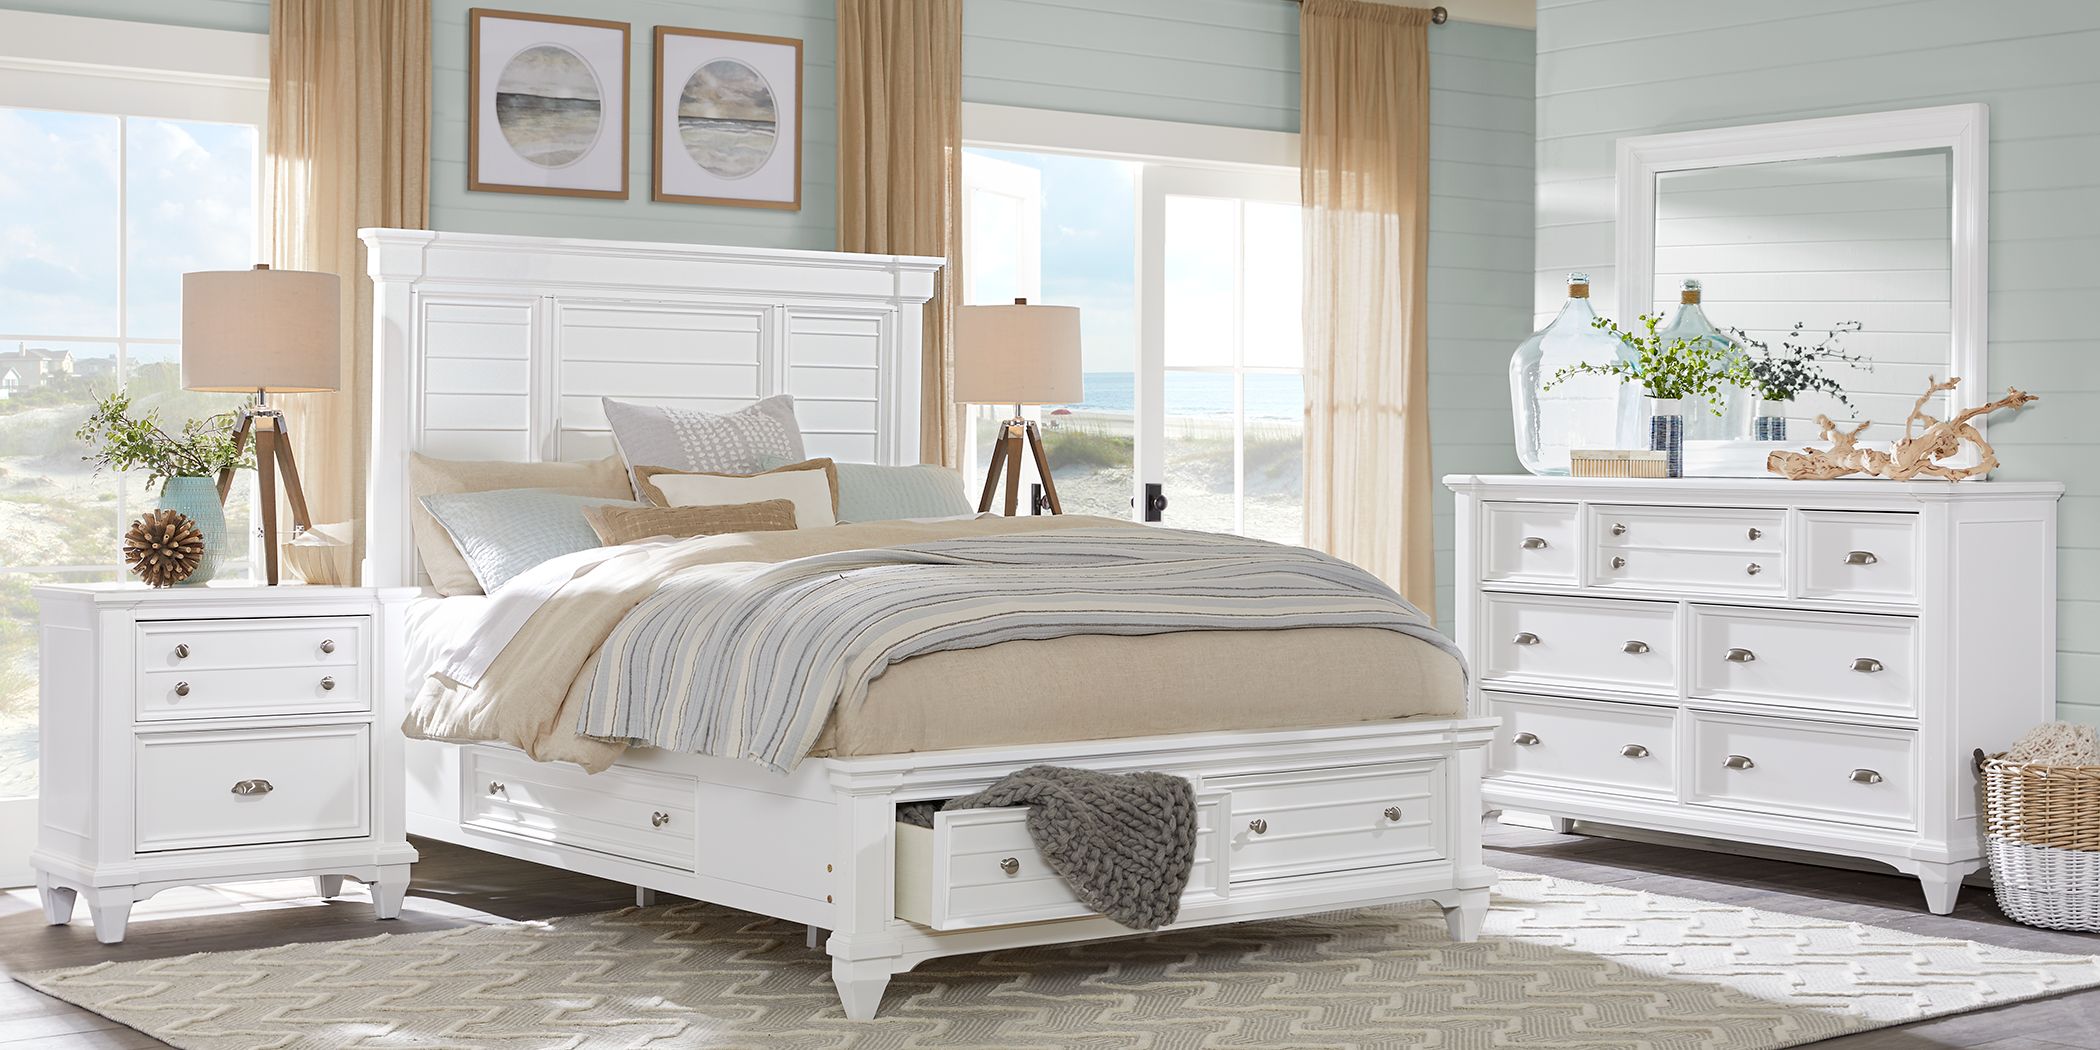 White King Size Bedroom Sets, White Bedroom Furniture King Size Bed